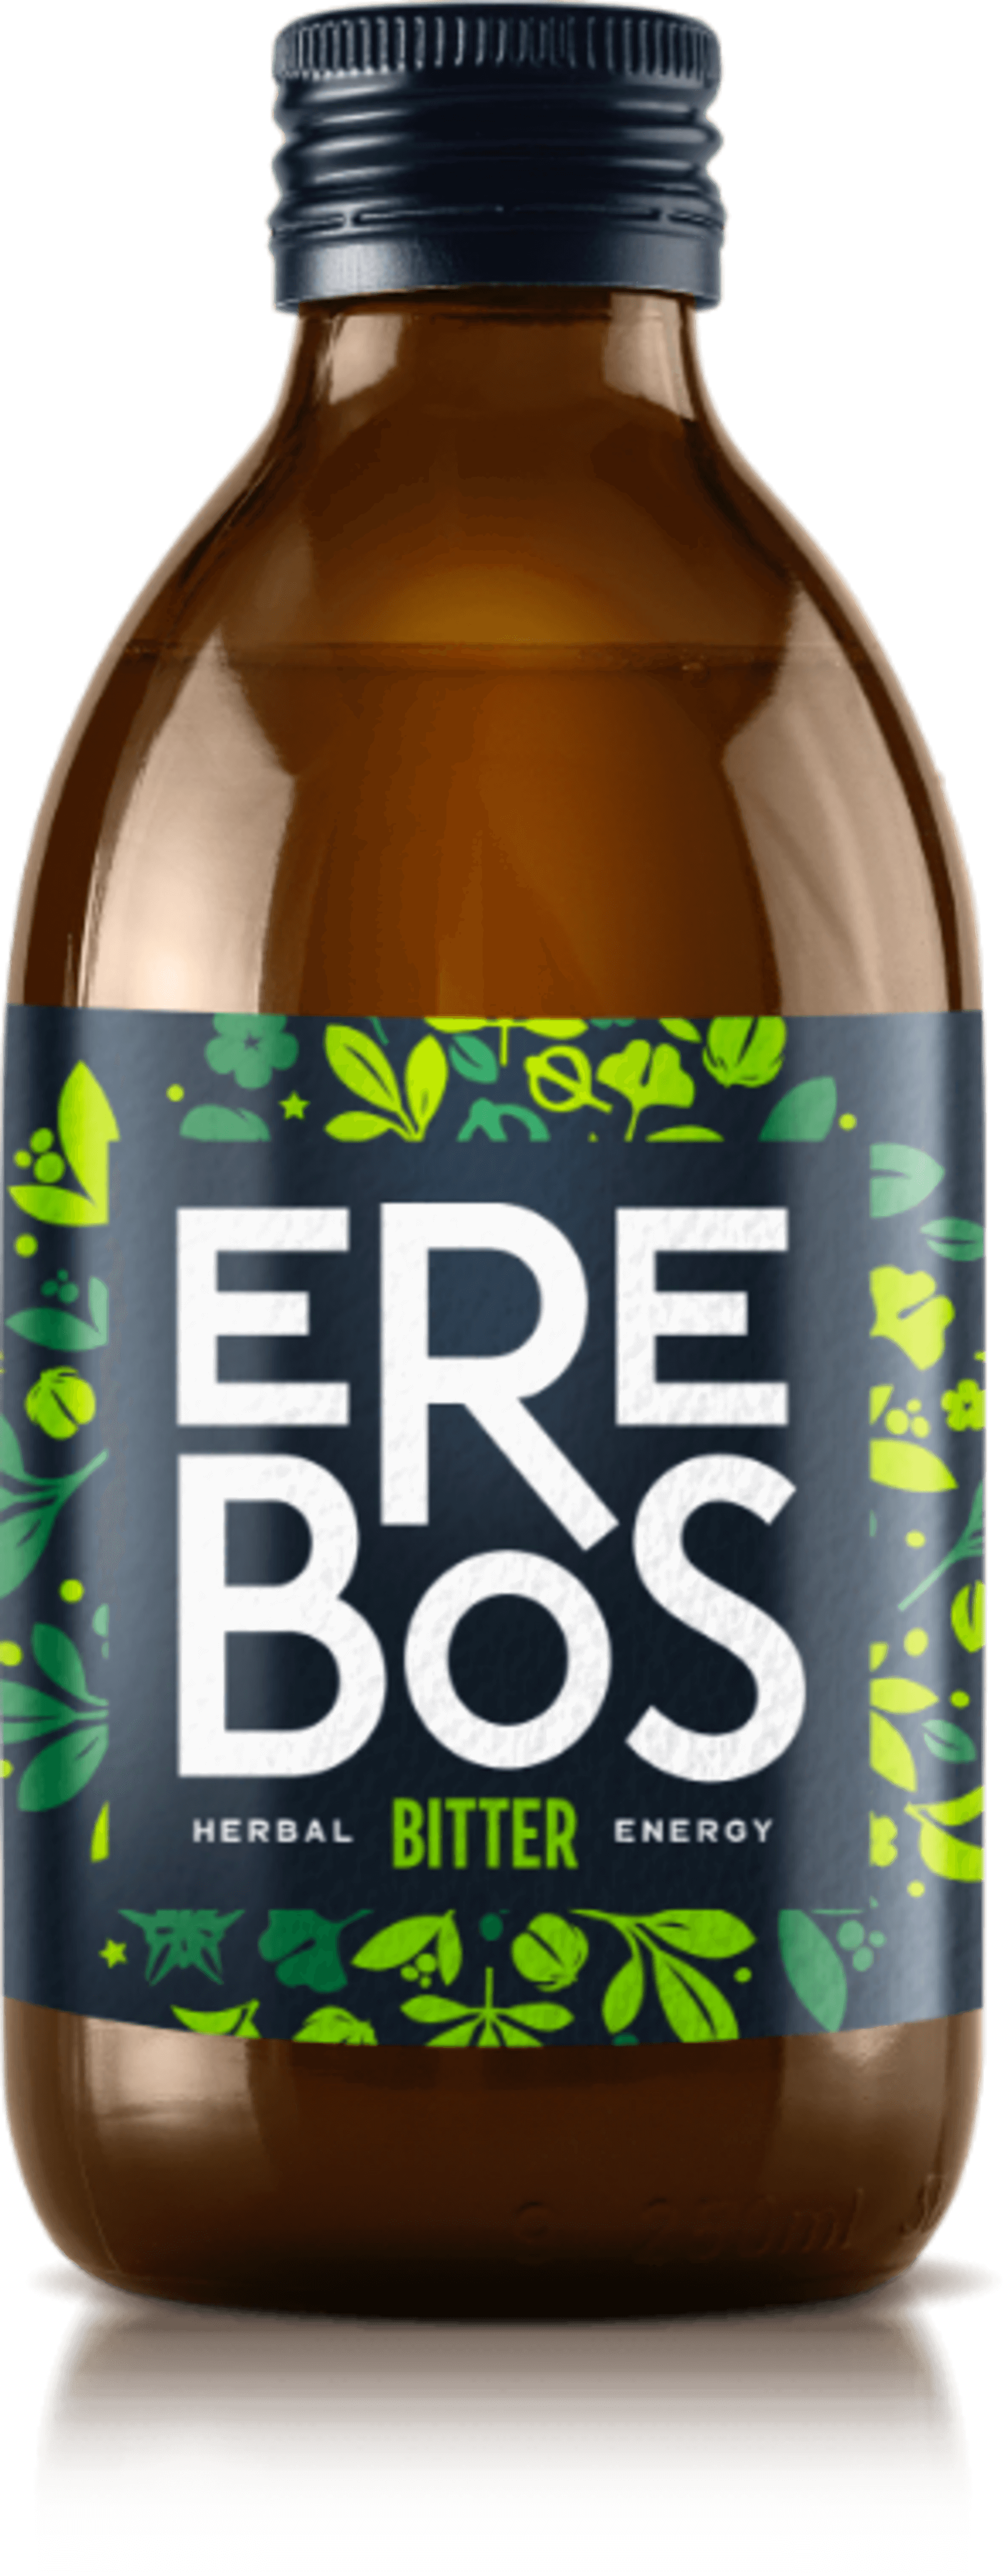 Erebos Bitter 250 ml